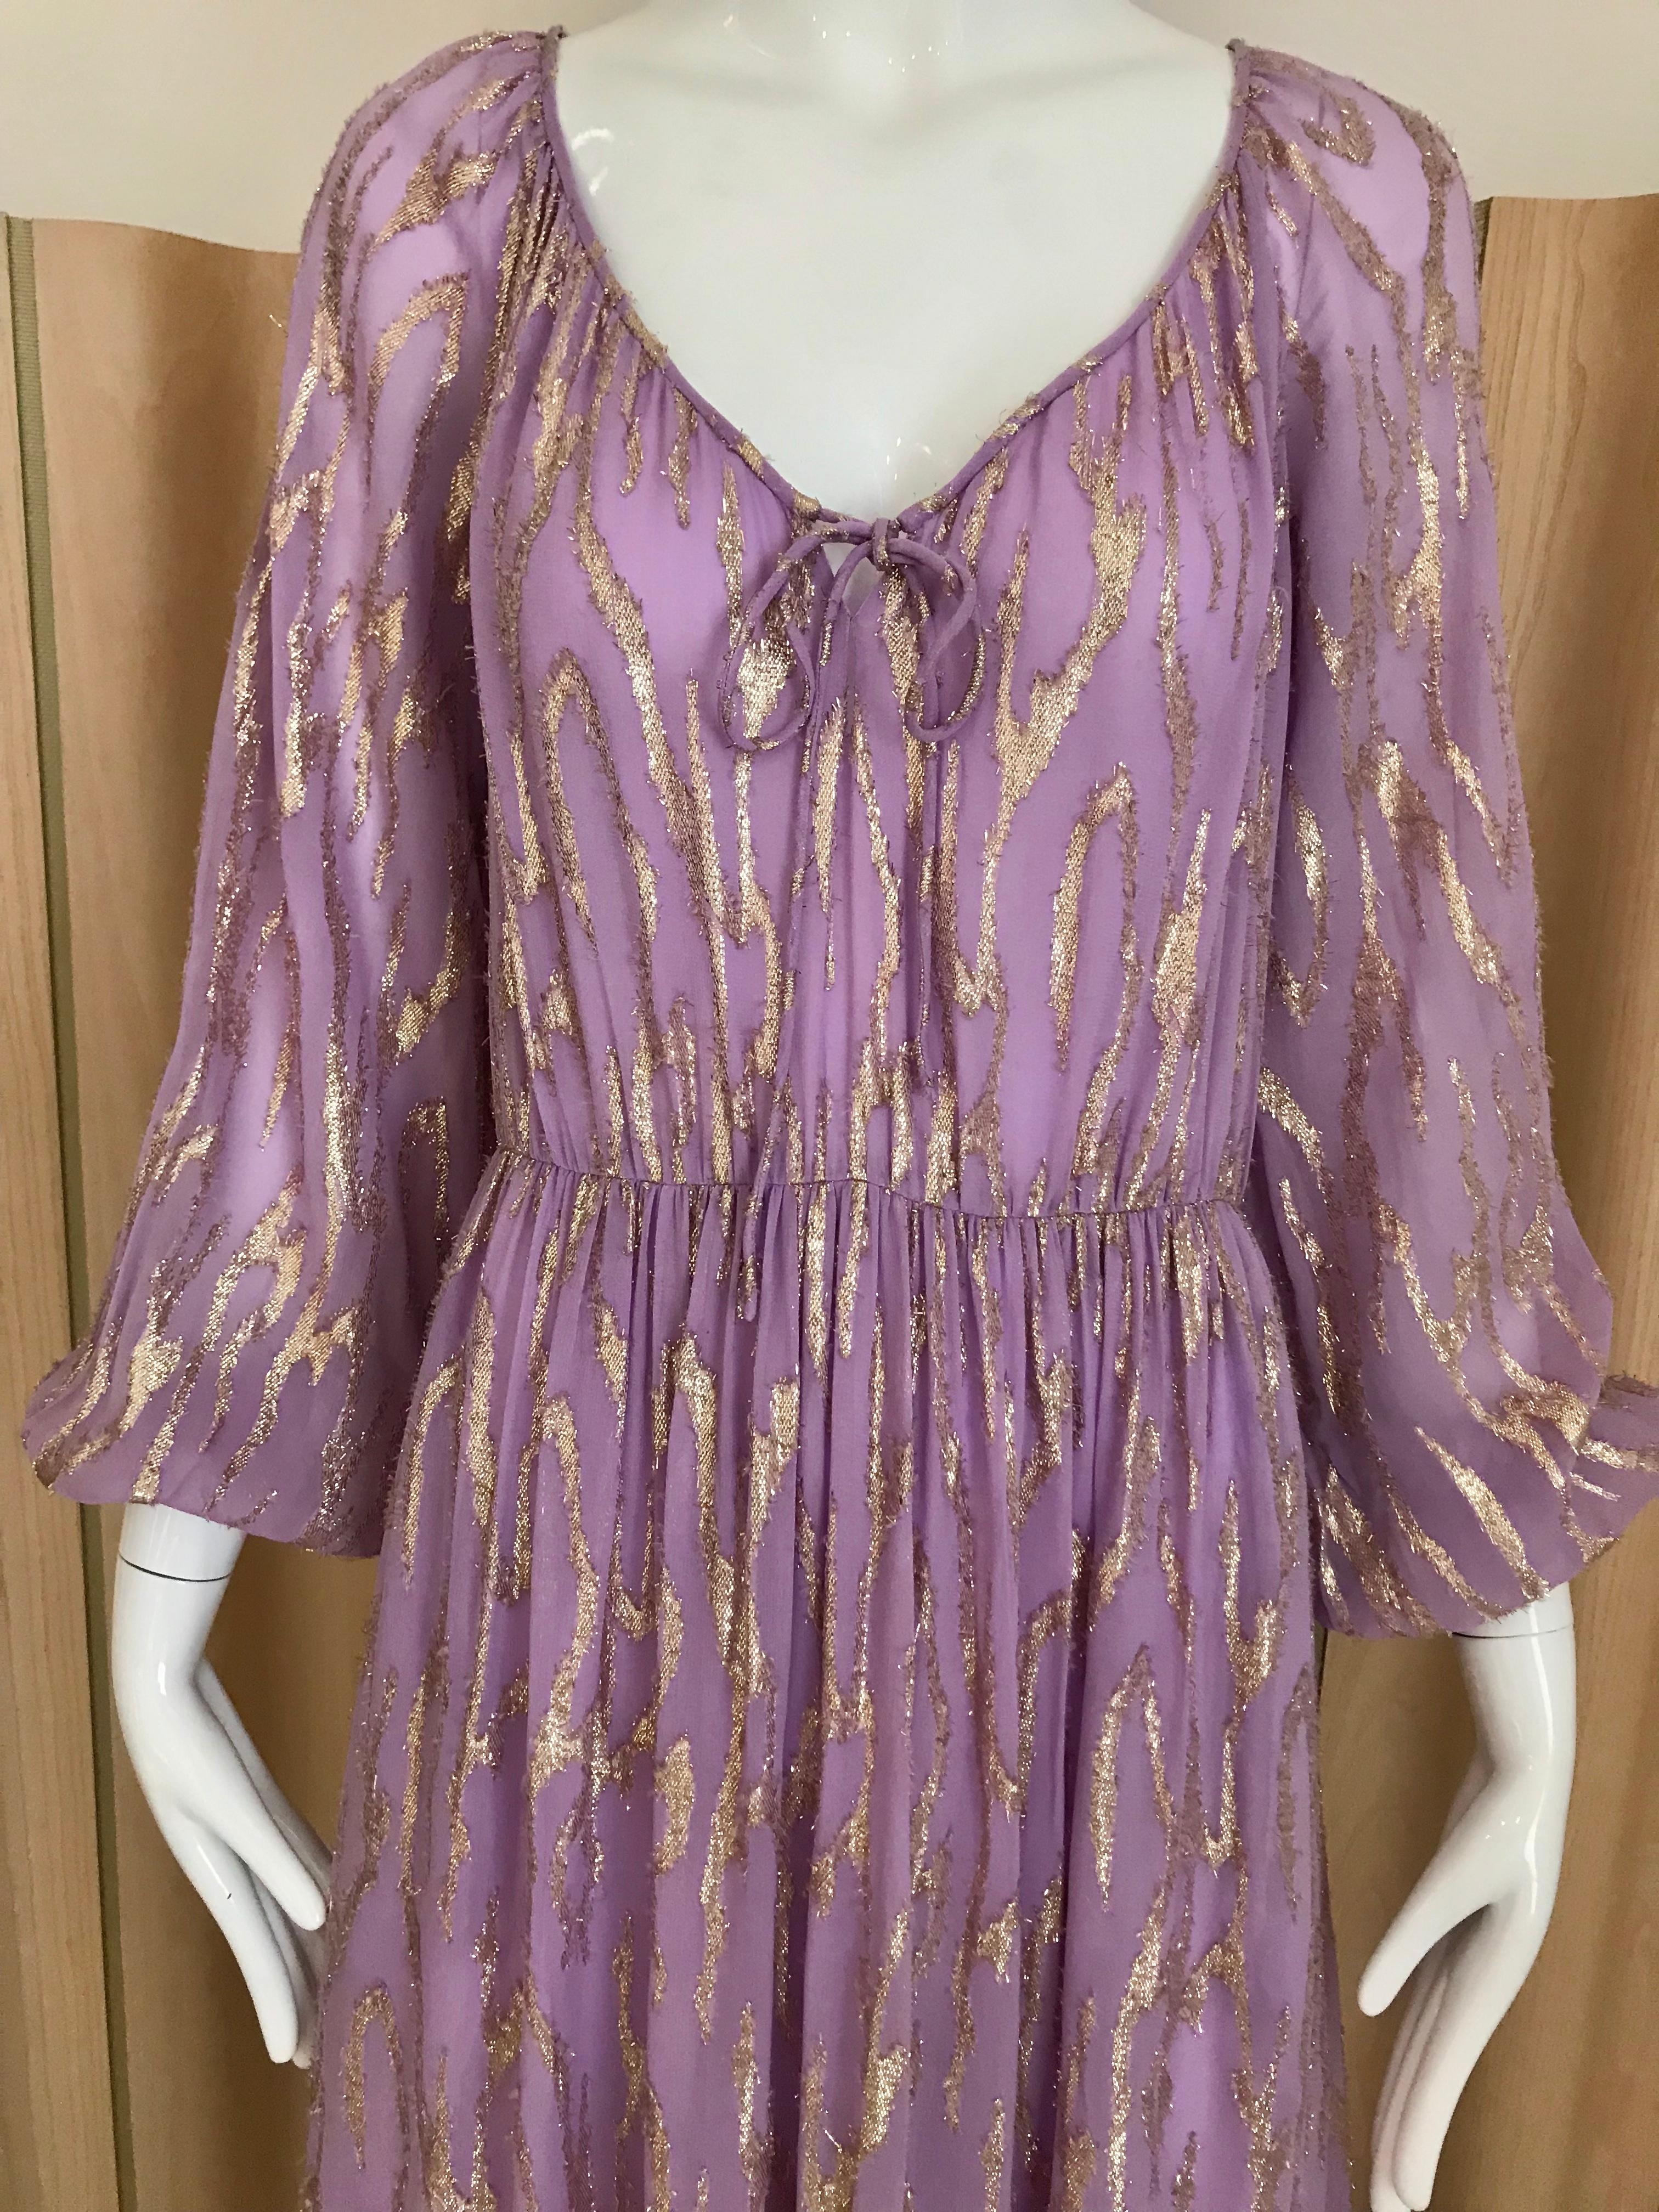 Vintage 70s Oscar de la rent a purple lavender long sleeve dress with gold metallic sheen.
Bust: 40 inches/ waist 28 inches/ Dress length: 56 inches/ sleeve length: 25 inches
**belt sold separately